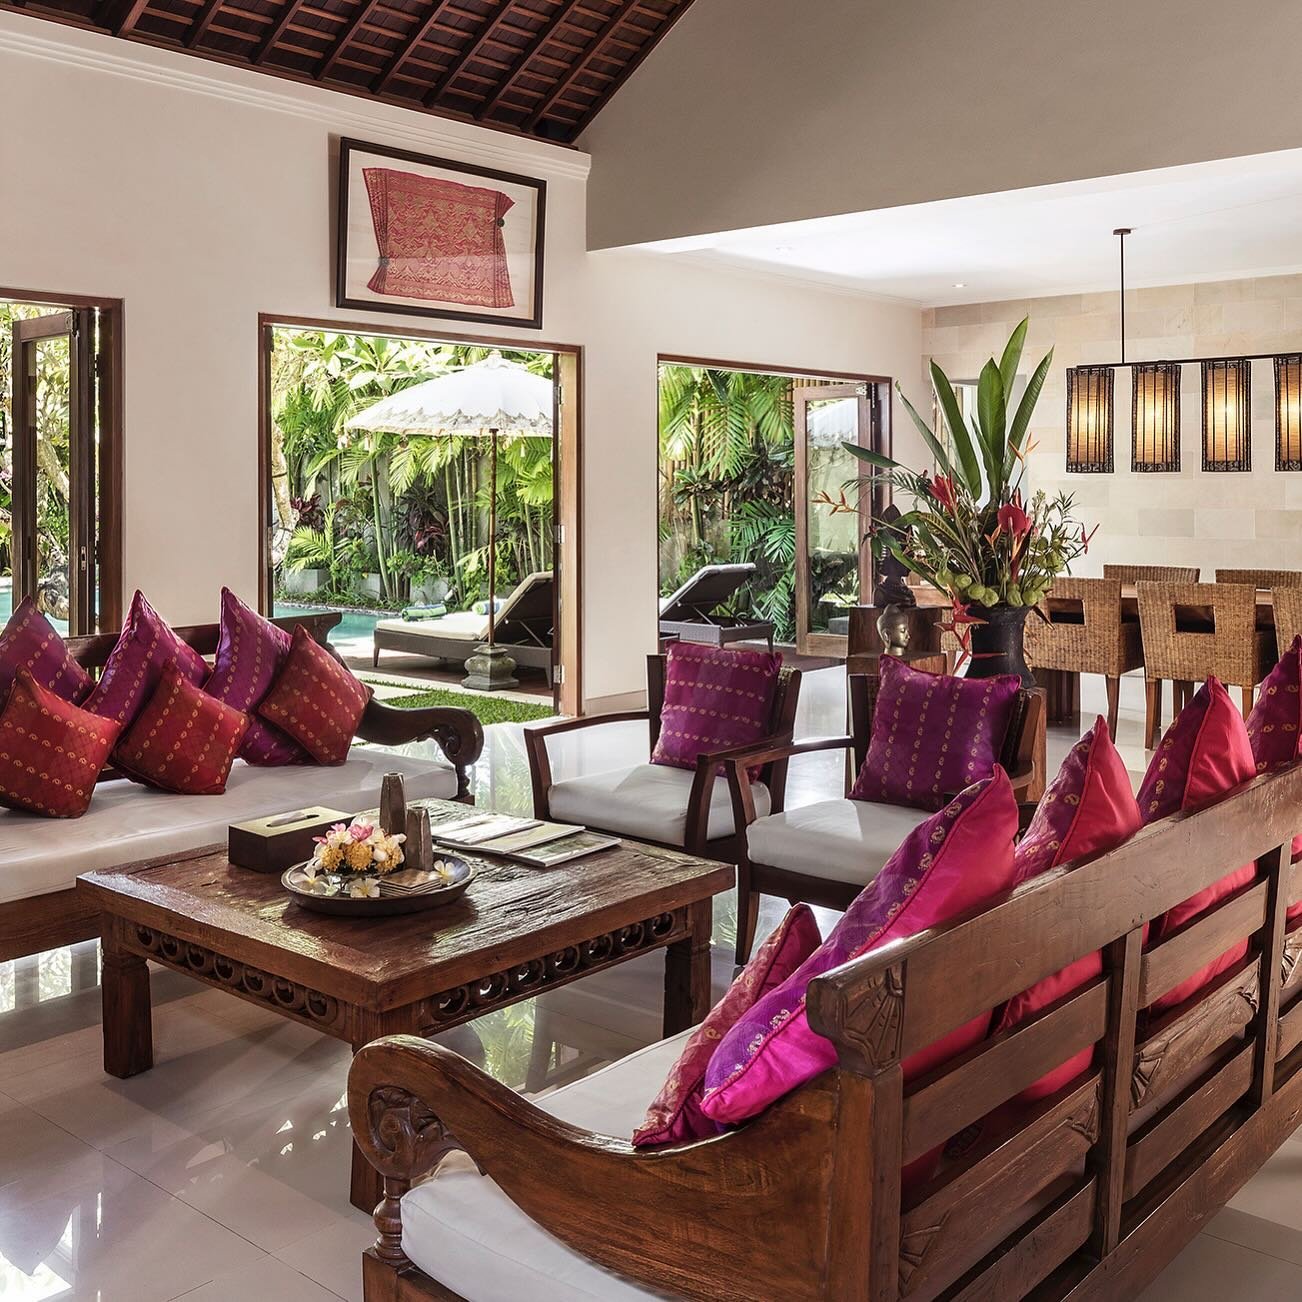 Contemporary Balinese interior design from the living room across to the dining room at Villa Songket. #bali #baliholiday #balistyle #baliliving #tropicalasianatmosphere #balidesign #balivilla #tropicalstyĺe #tropical #visitbali